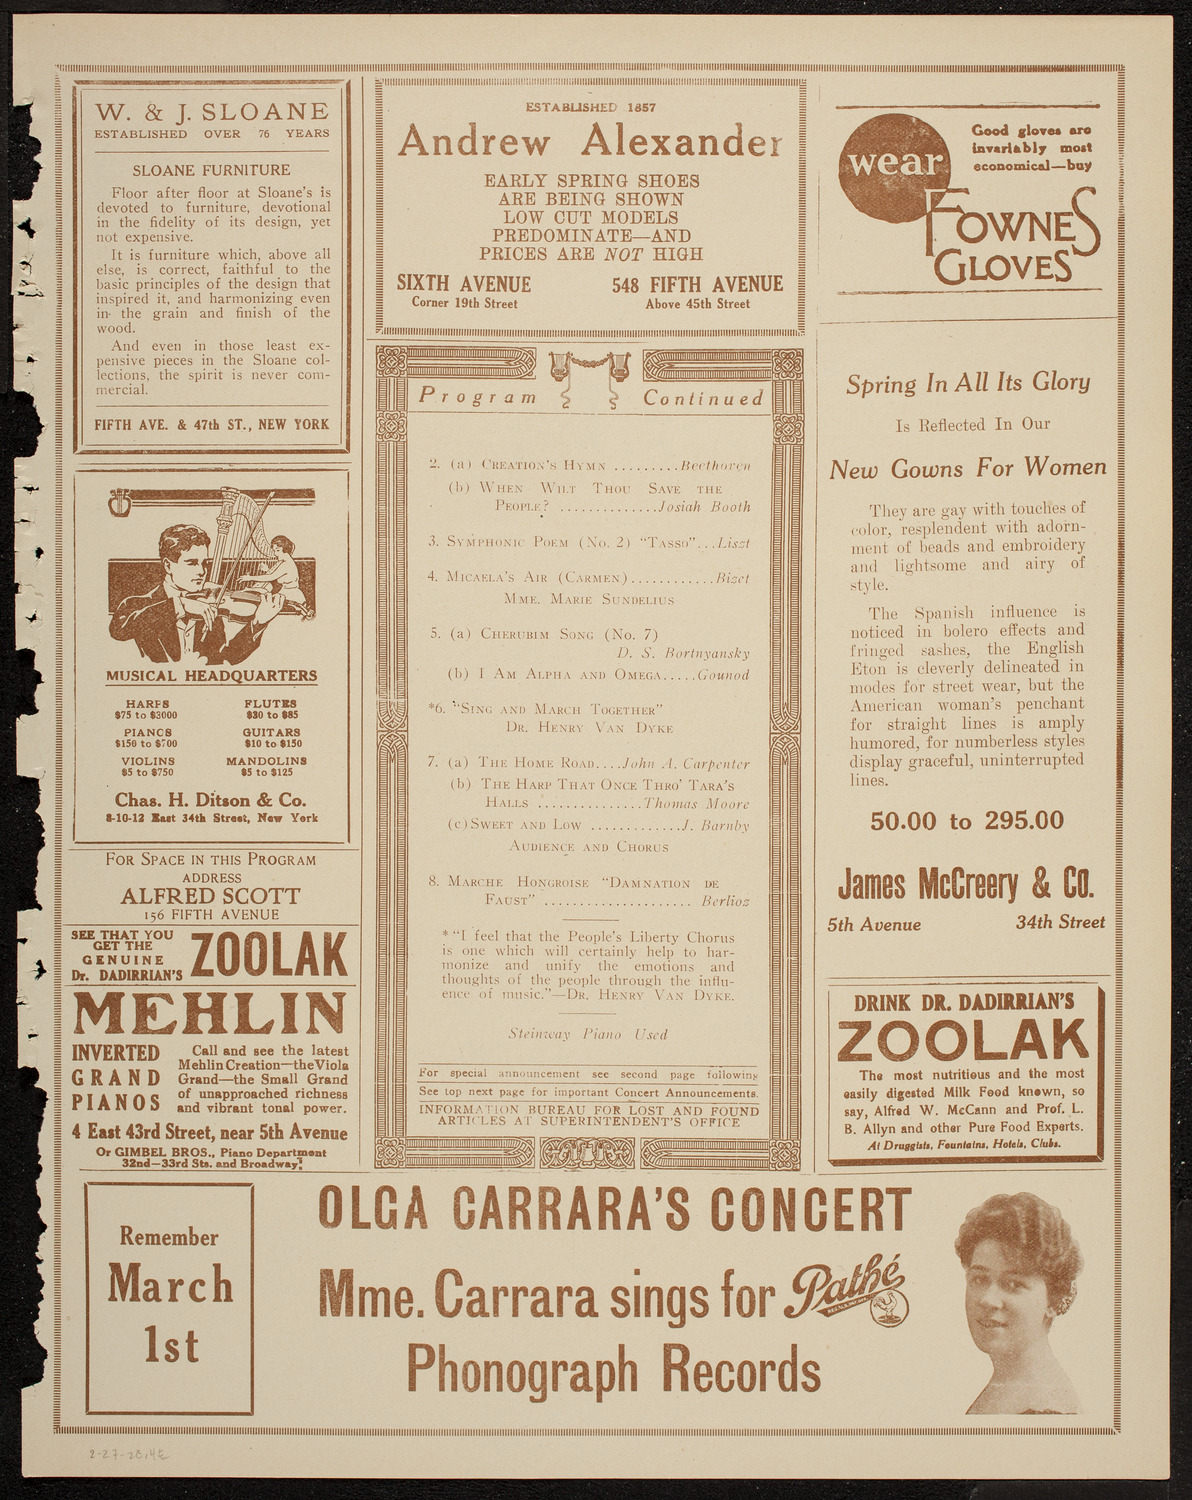 People's Liberty Chorus, February 27, 1920, program page 7